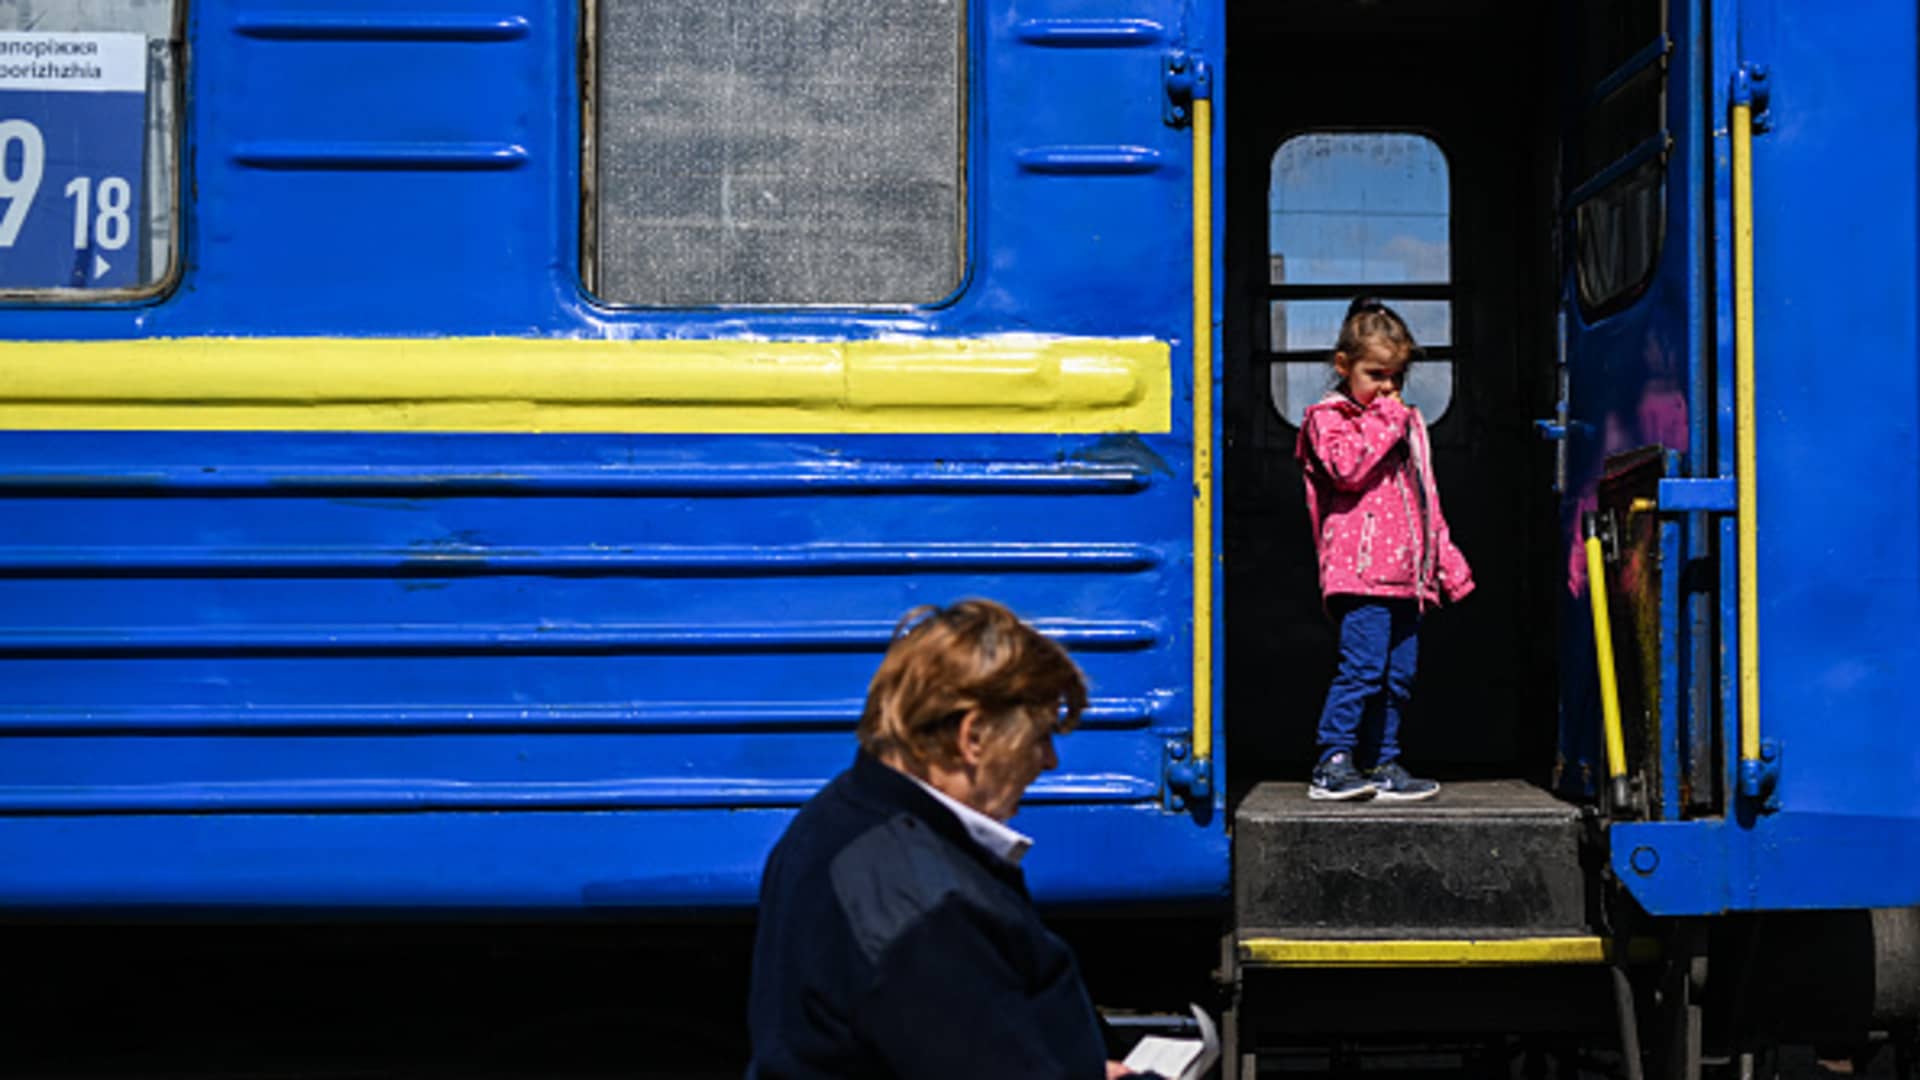 Ukrainians wait to board a train towards Zaporizhzia at the Main train station in Lviv, Ukraine on May 14, 2022.